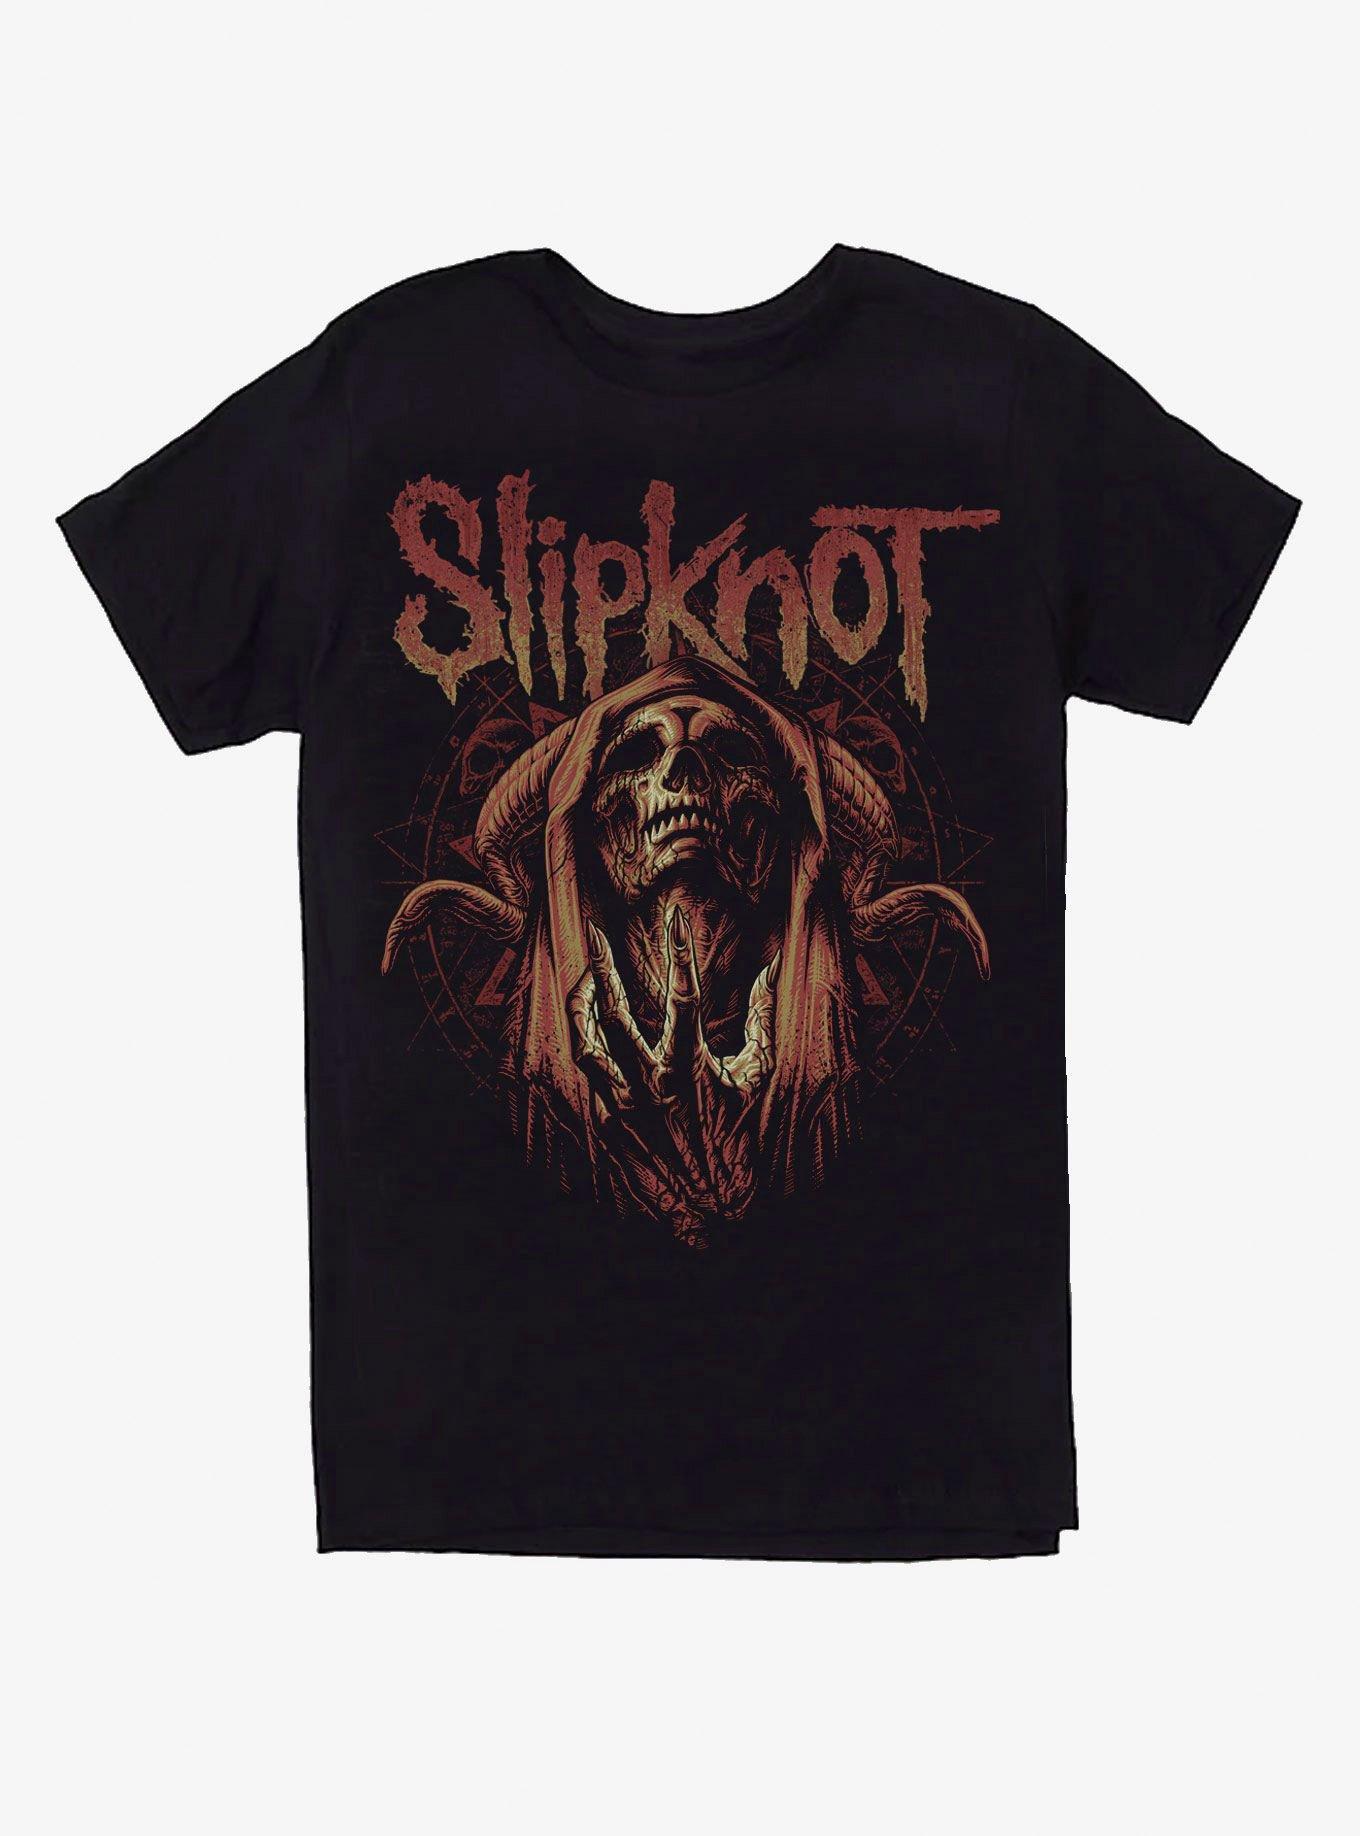 Slipknot Reaper T-Shirt Hot Topic